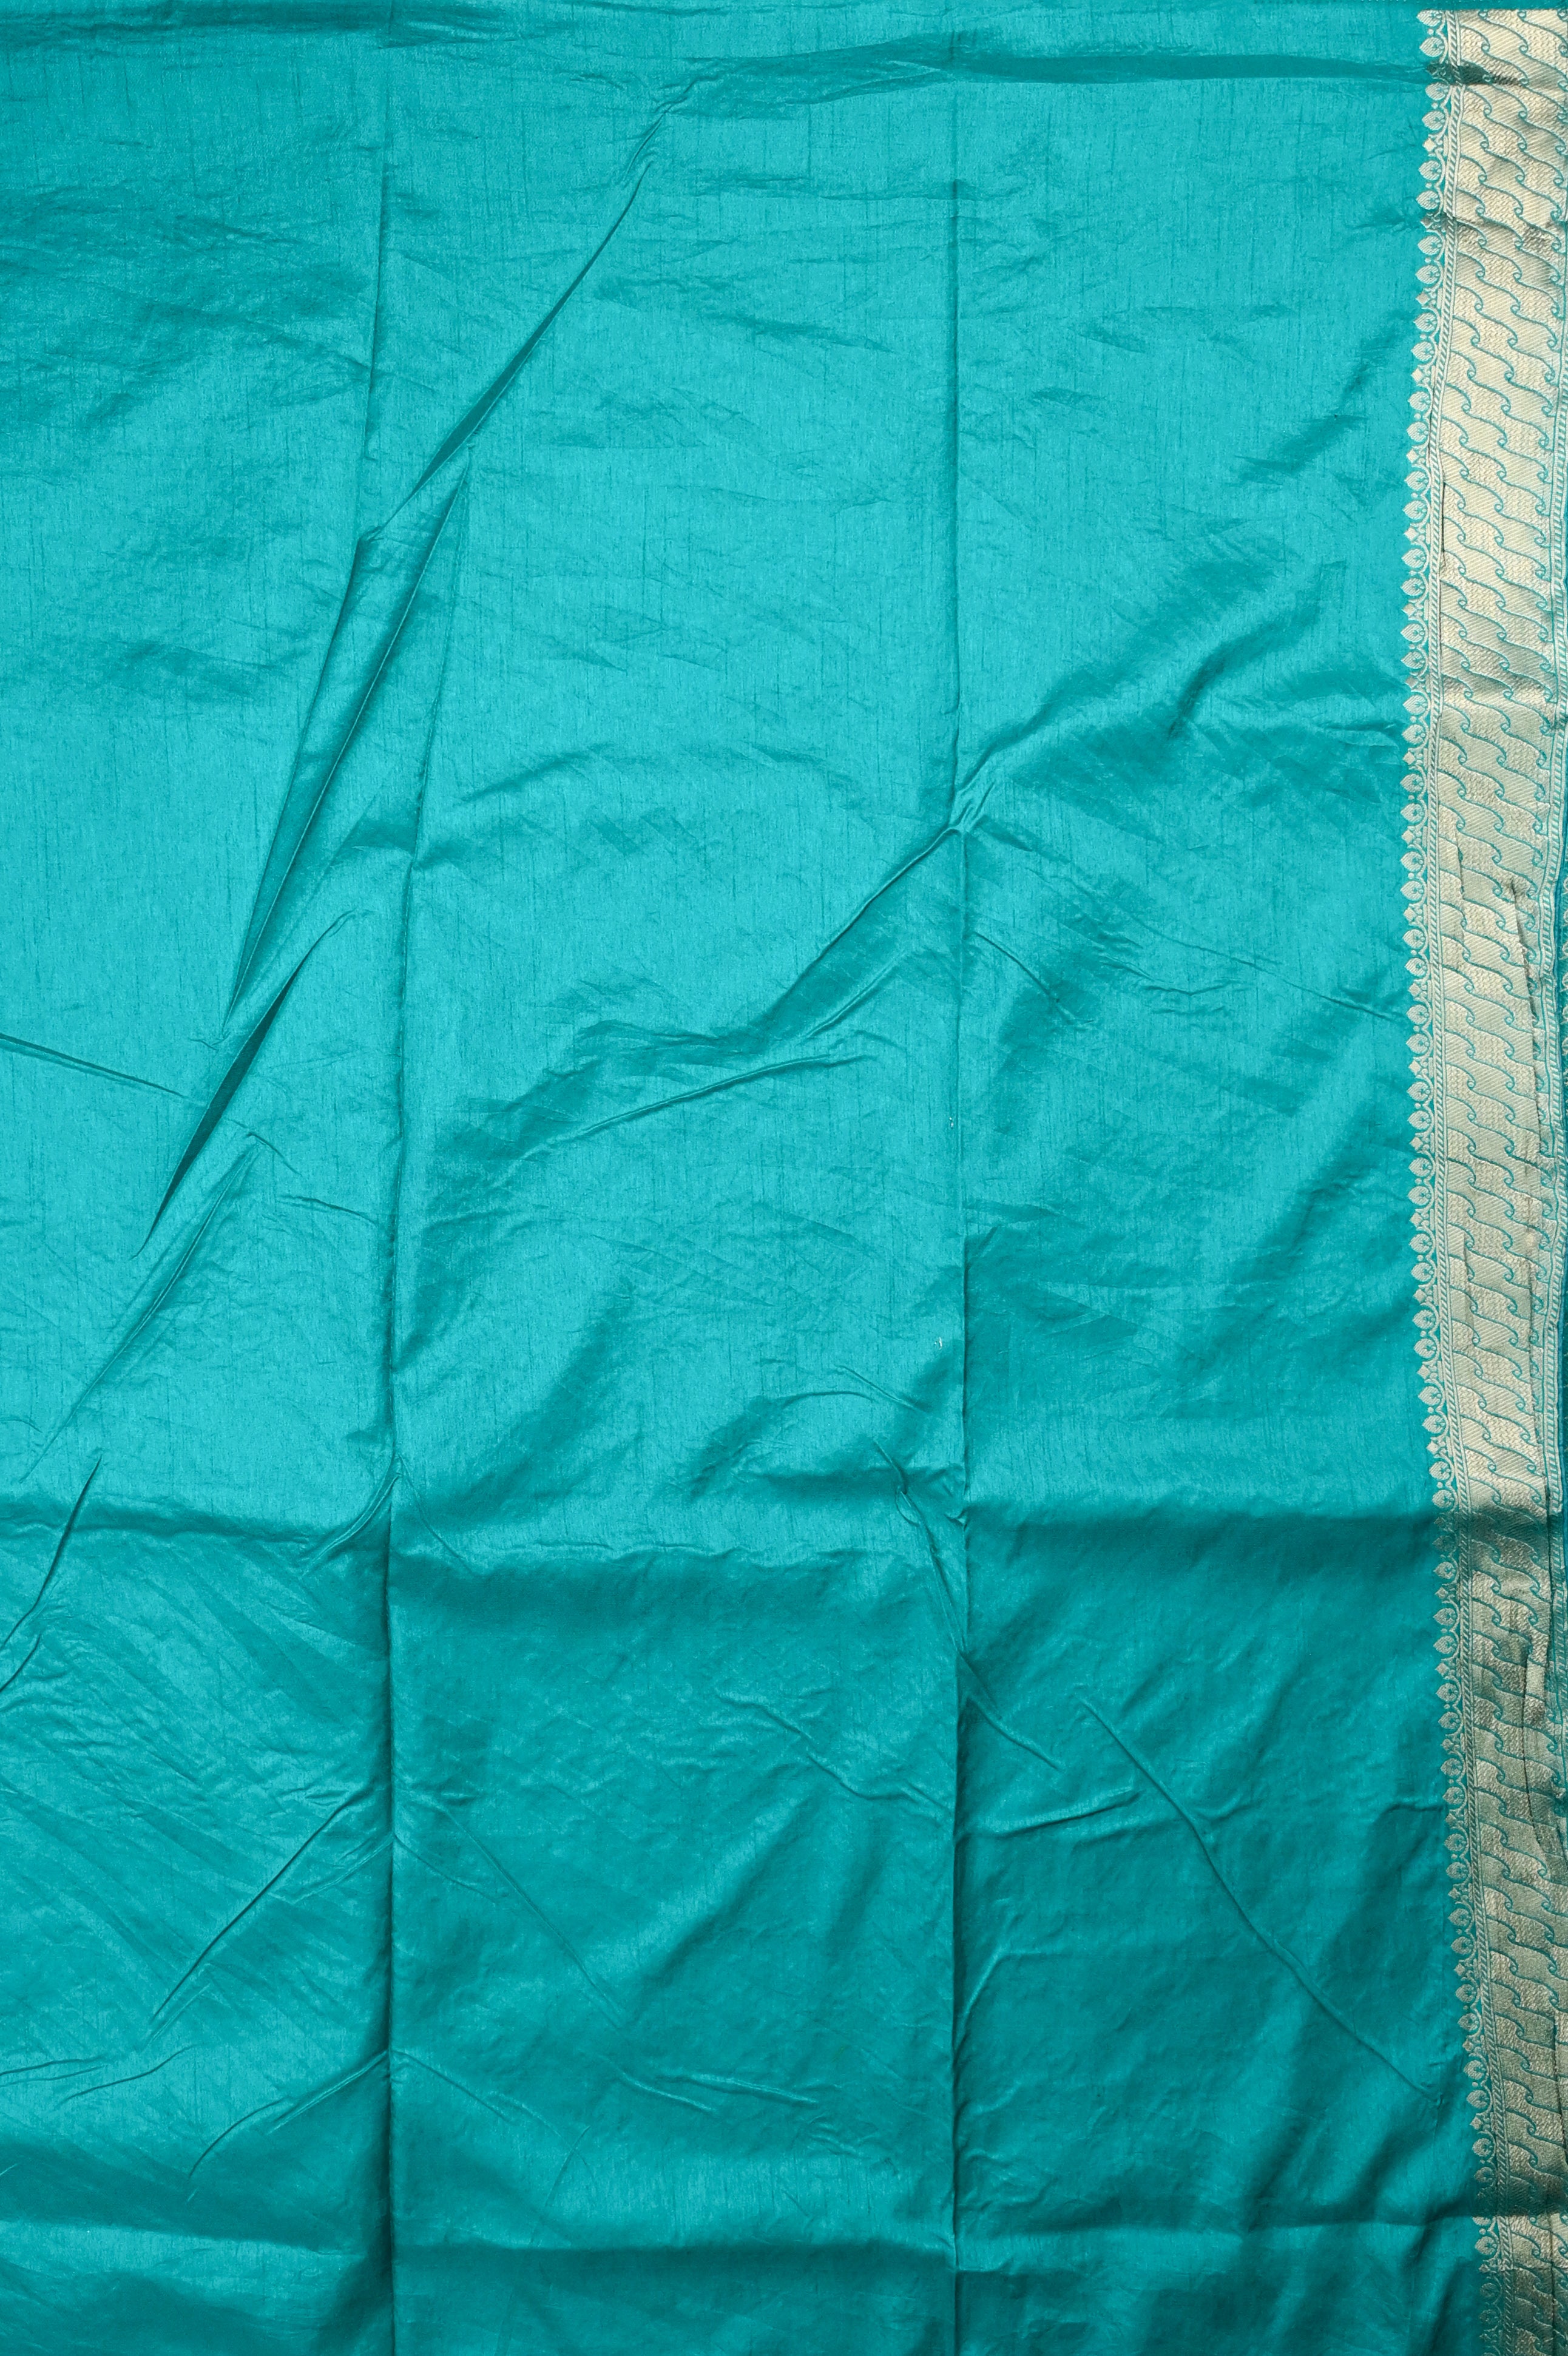 Dola silk saree sea green color with allover meenakari motives, rich pallu, small zari border and running plain blouse.